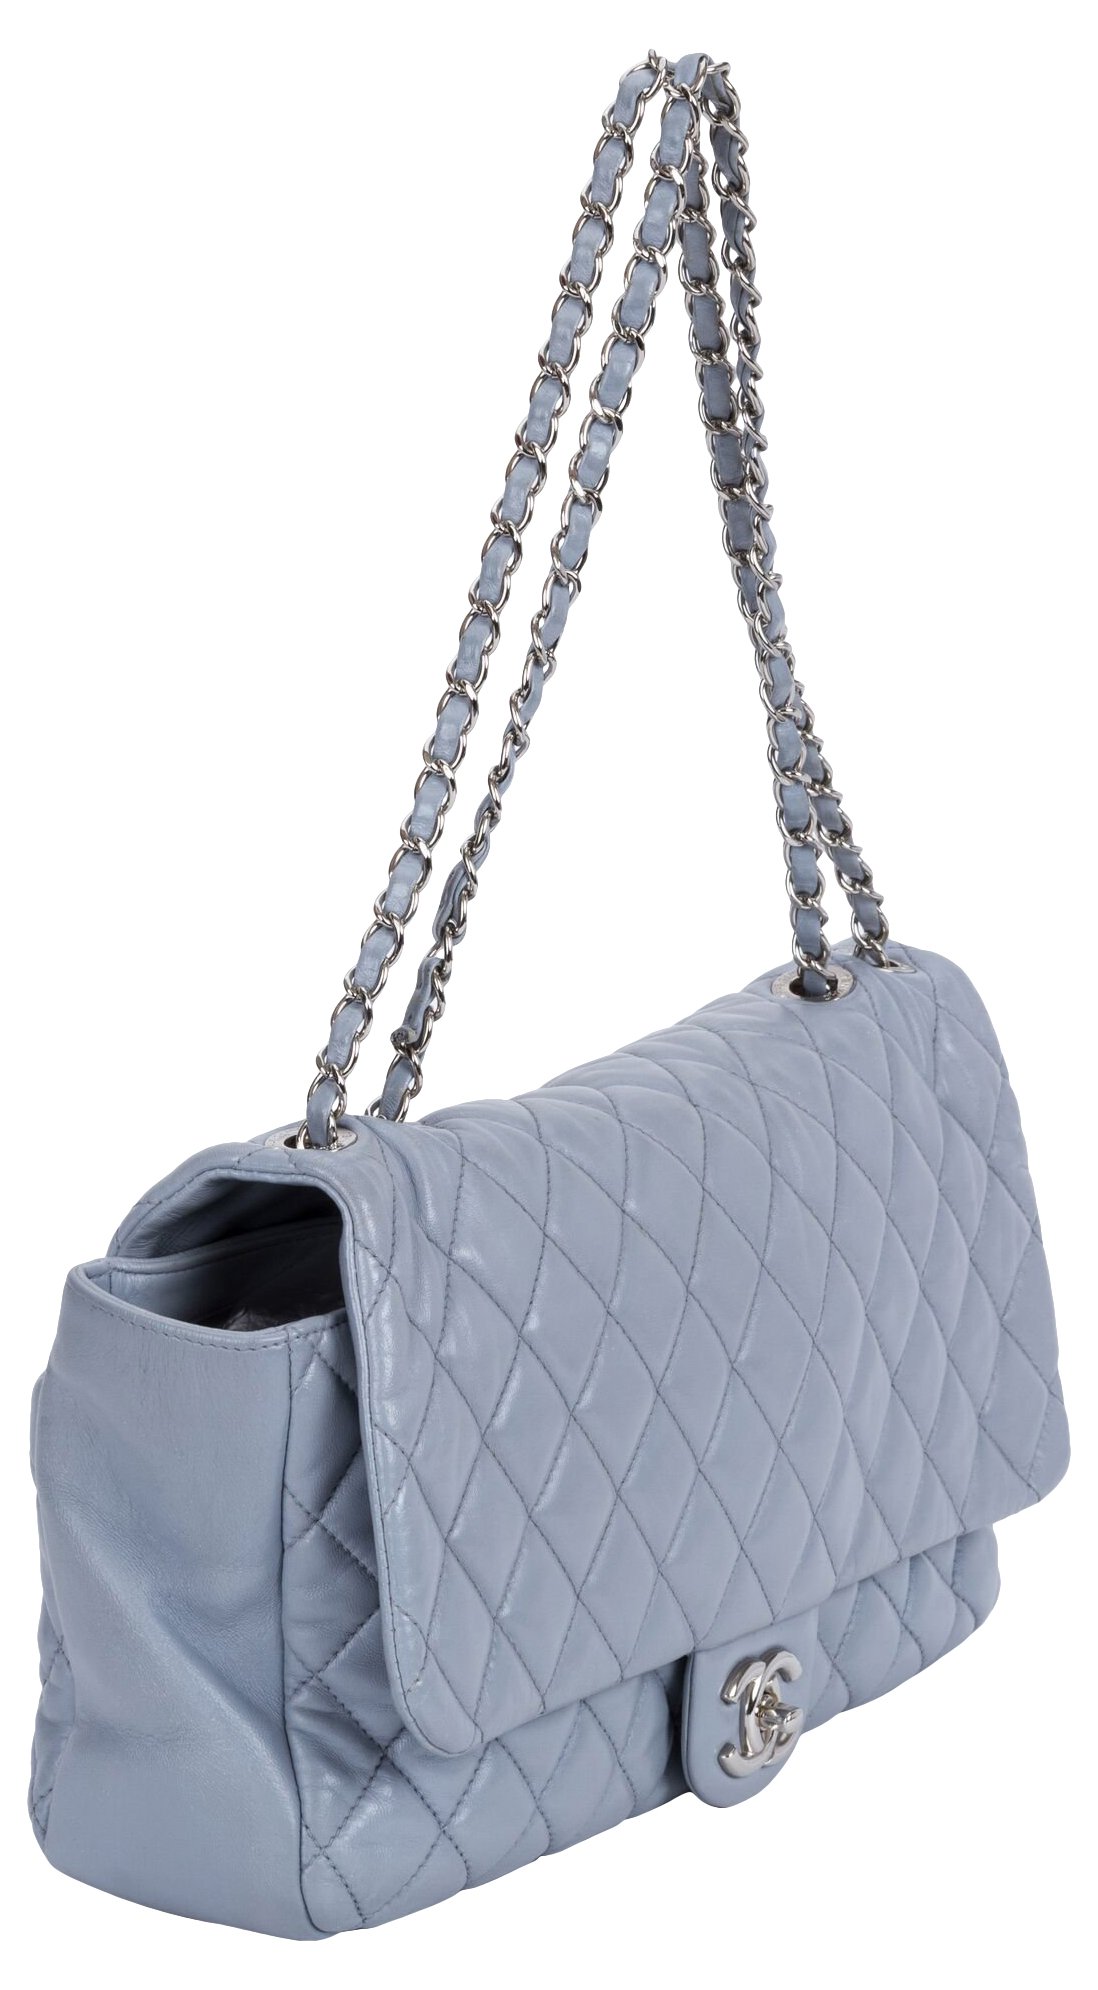 Chanel Handbag Raincoat - SOLD